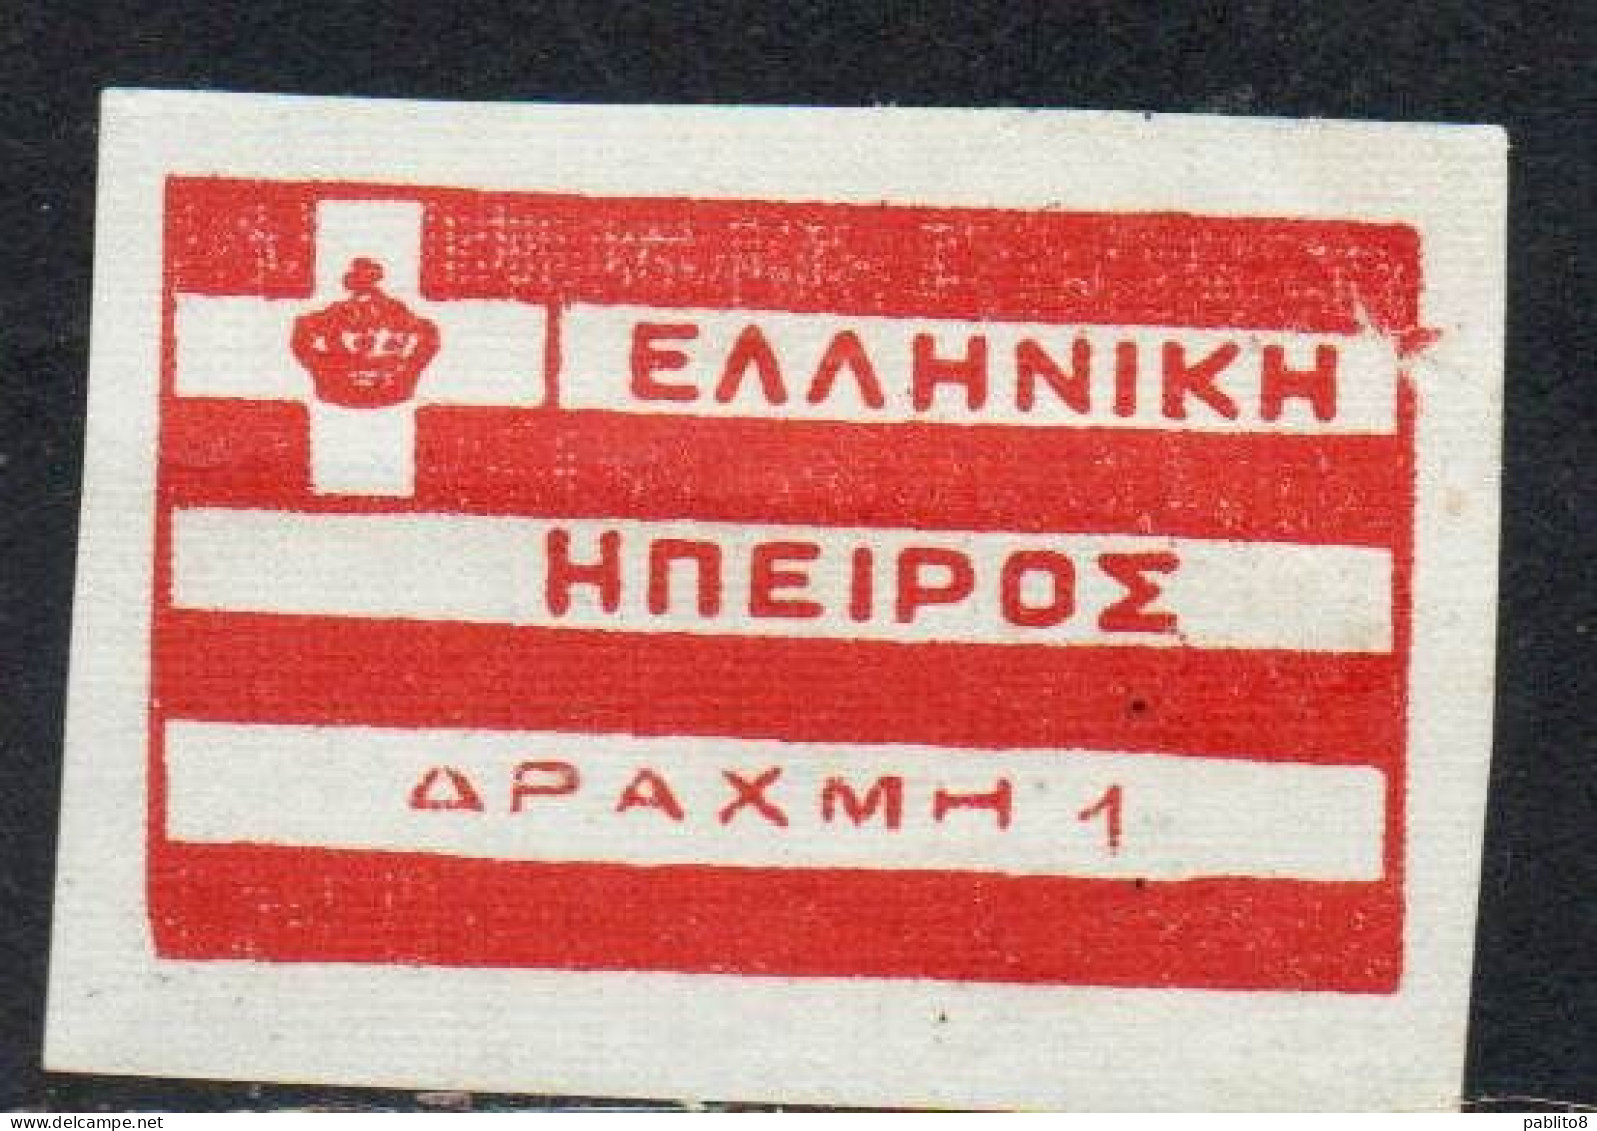 GREECE GRECIA HELLAS EPIRUS EPIRO 1914 FLAG LOCAL ISSUE 1d MNH - Epirus & Albanië